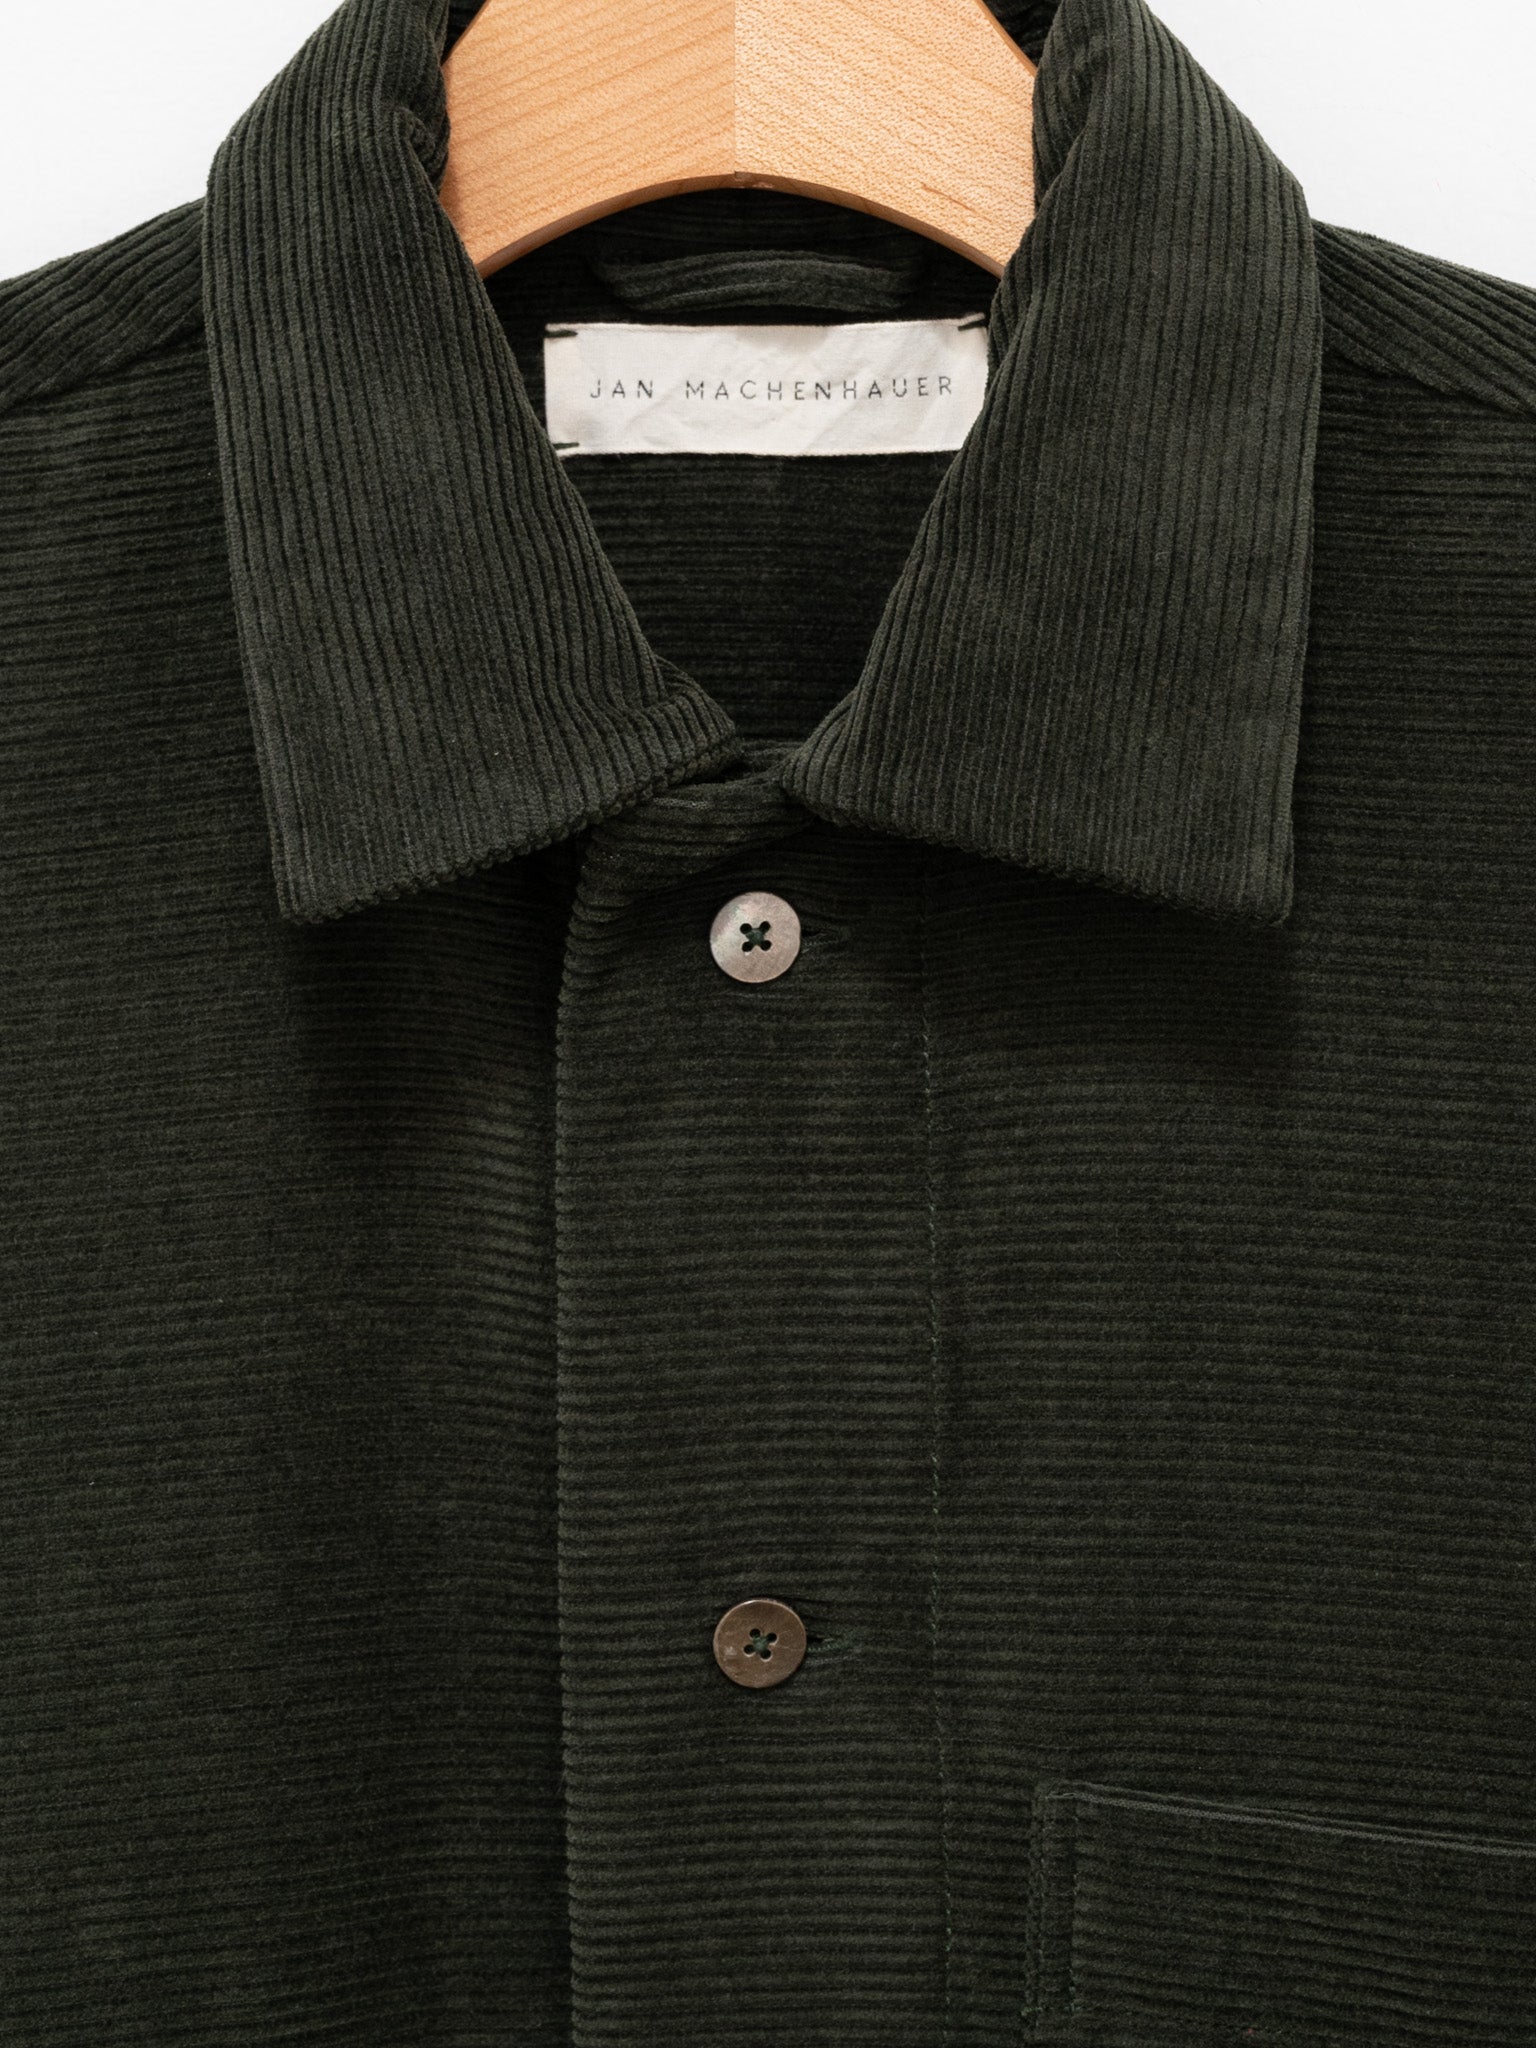 Namu Shop - Jan Machenhauer Dale Corduroy Shirt Jacket - Forest